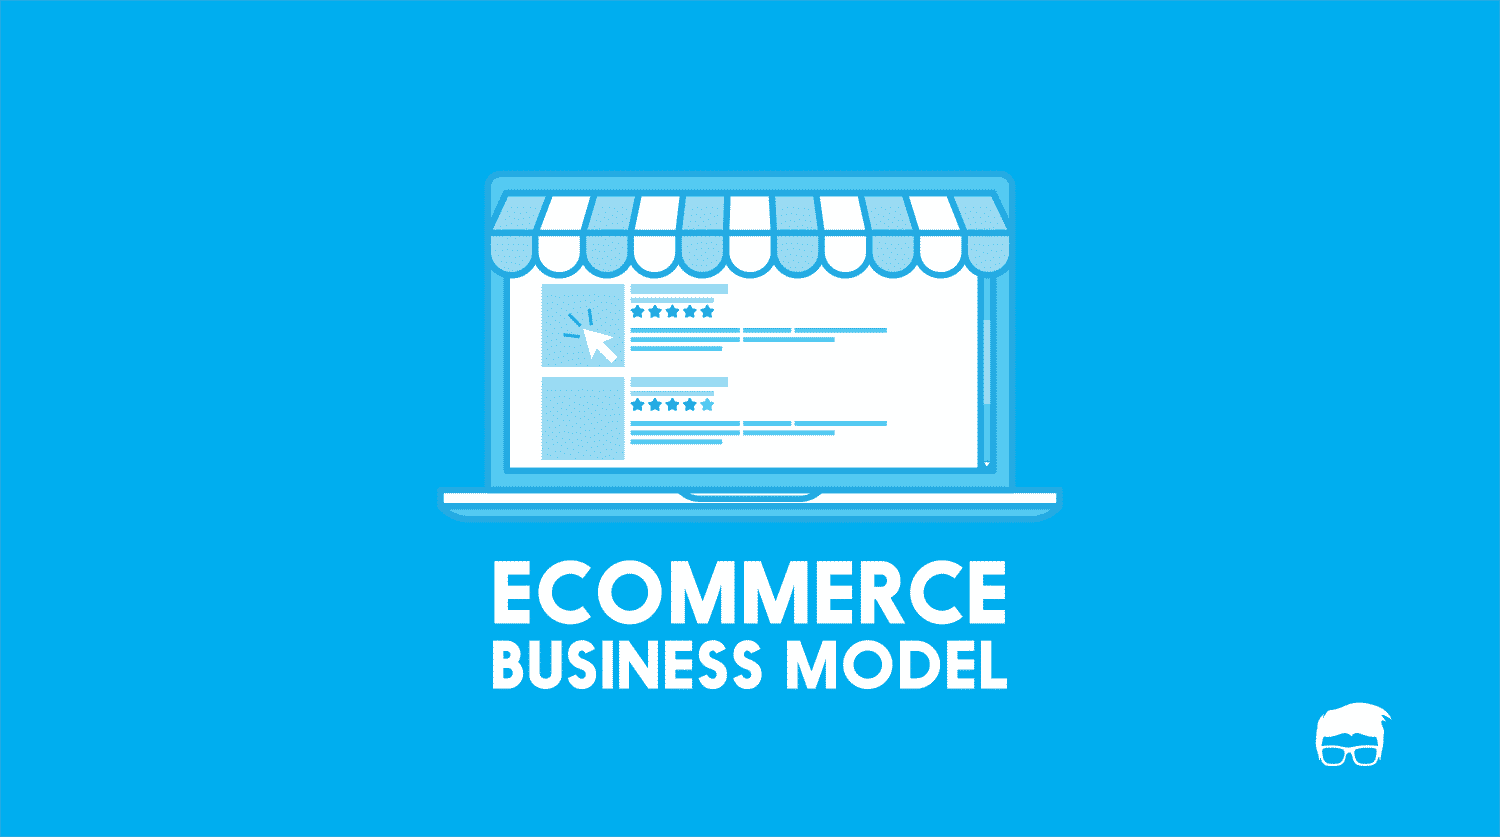 Ecommerce Business & Revenue Models Explained